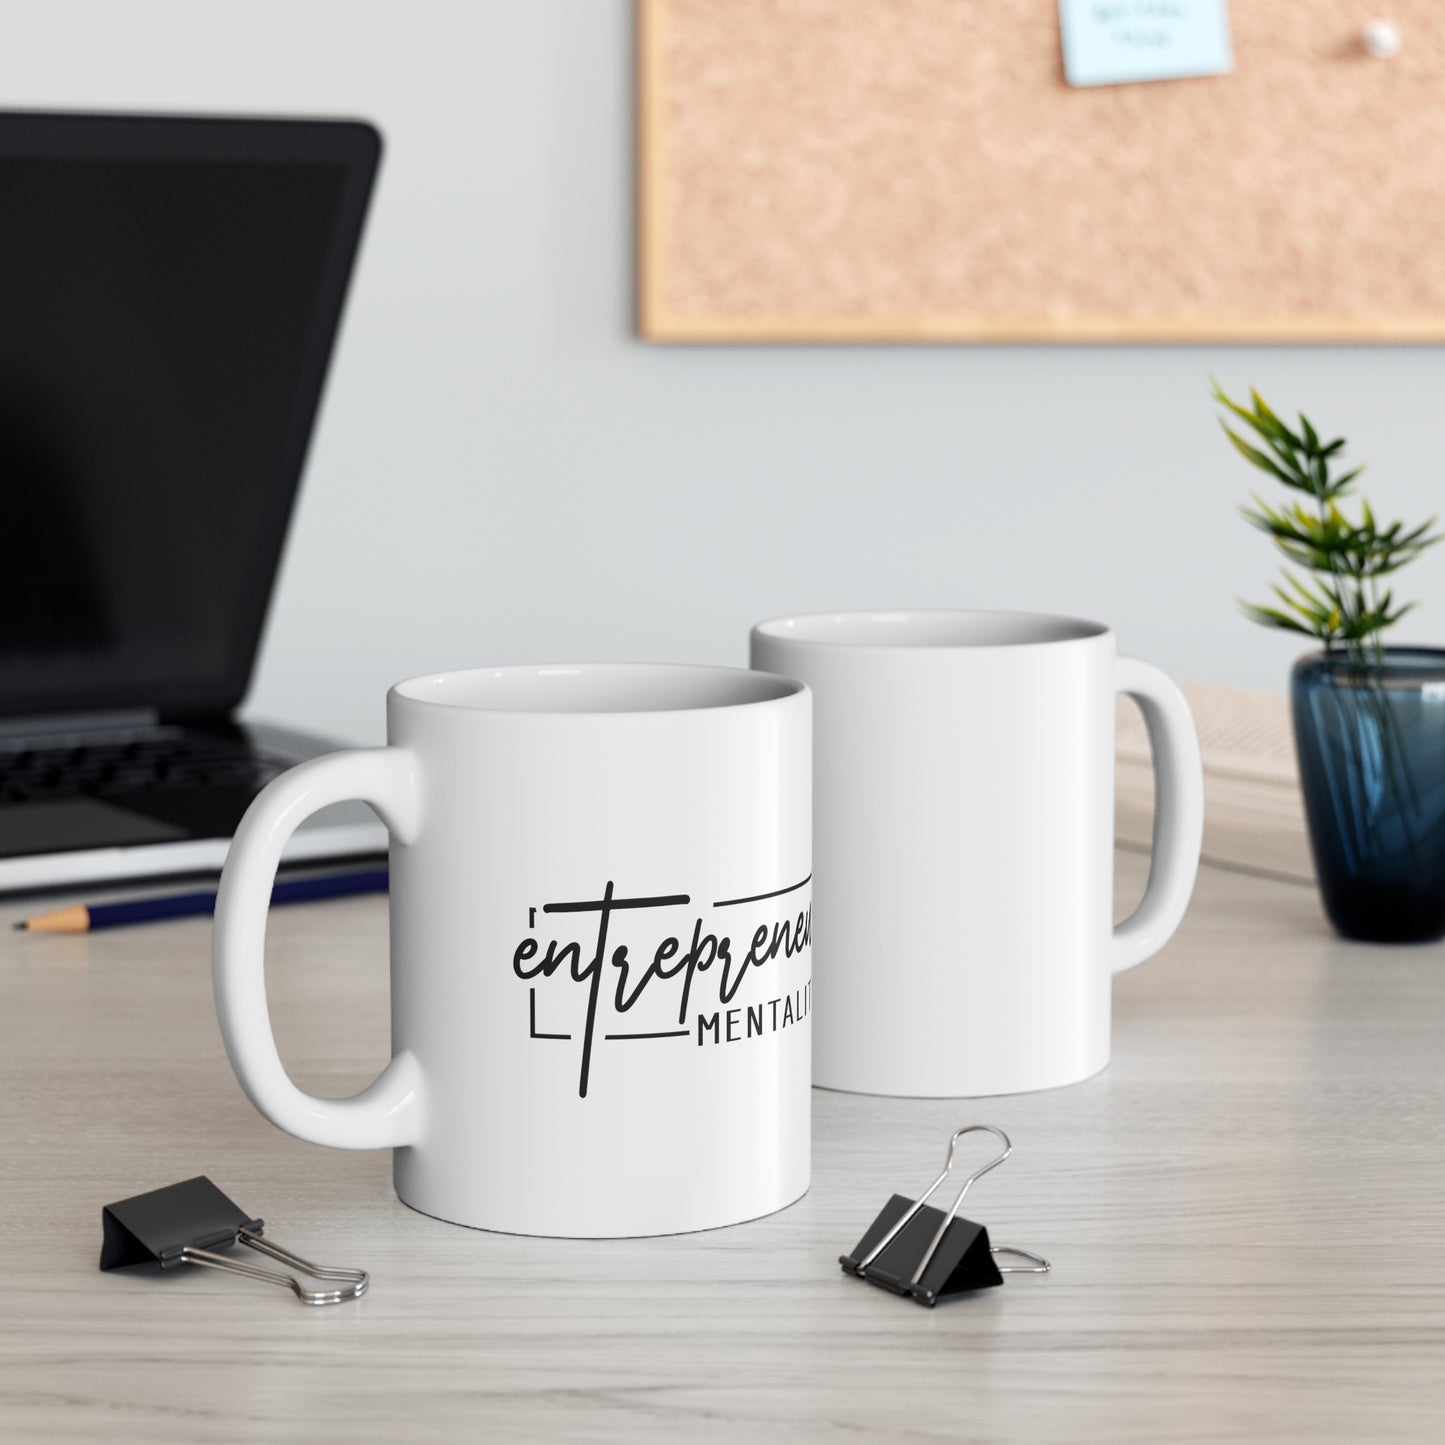 Entrepreneur Mentality Ceramic Coffee Mug 11oz